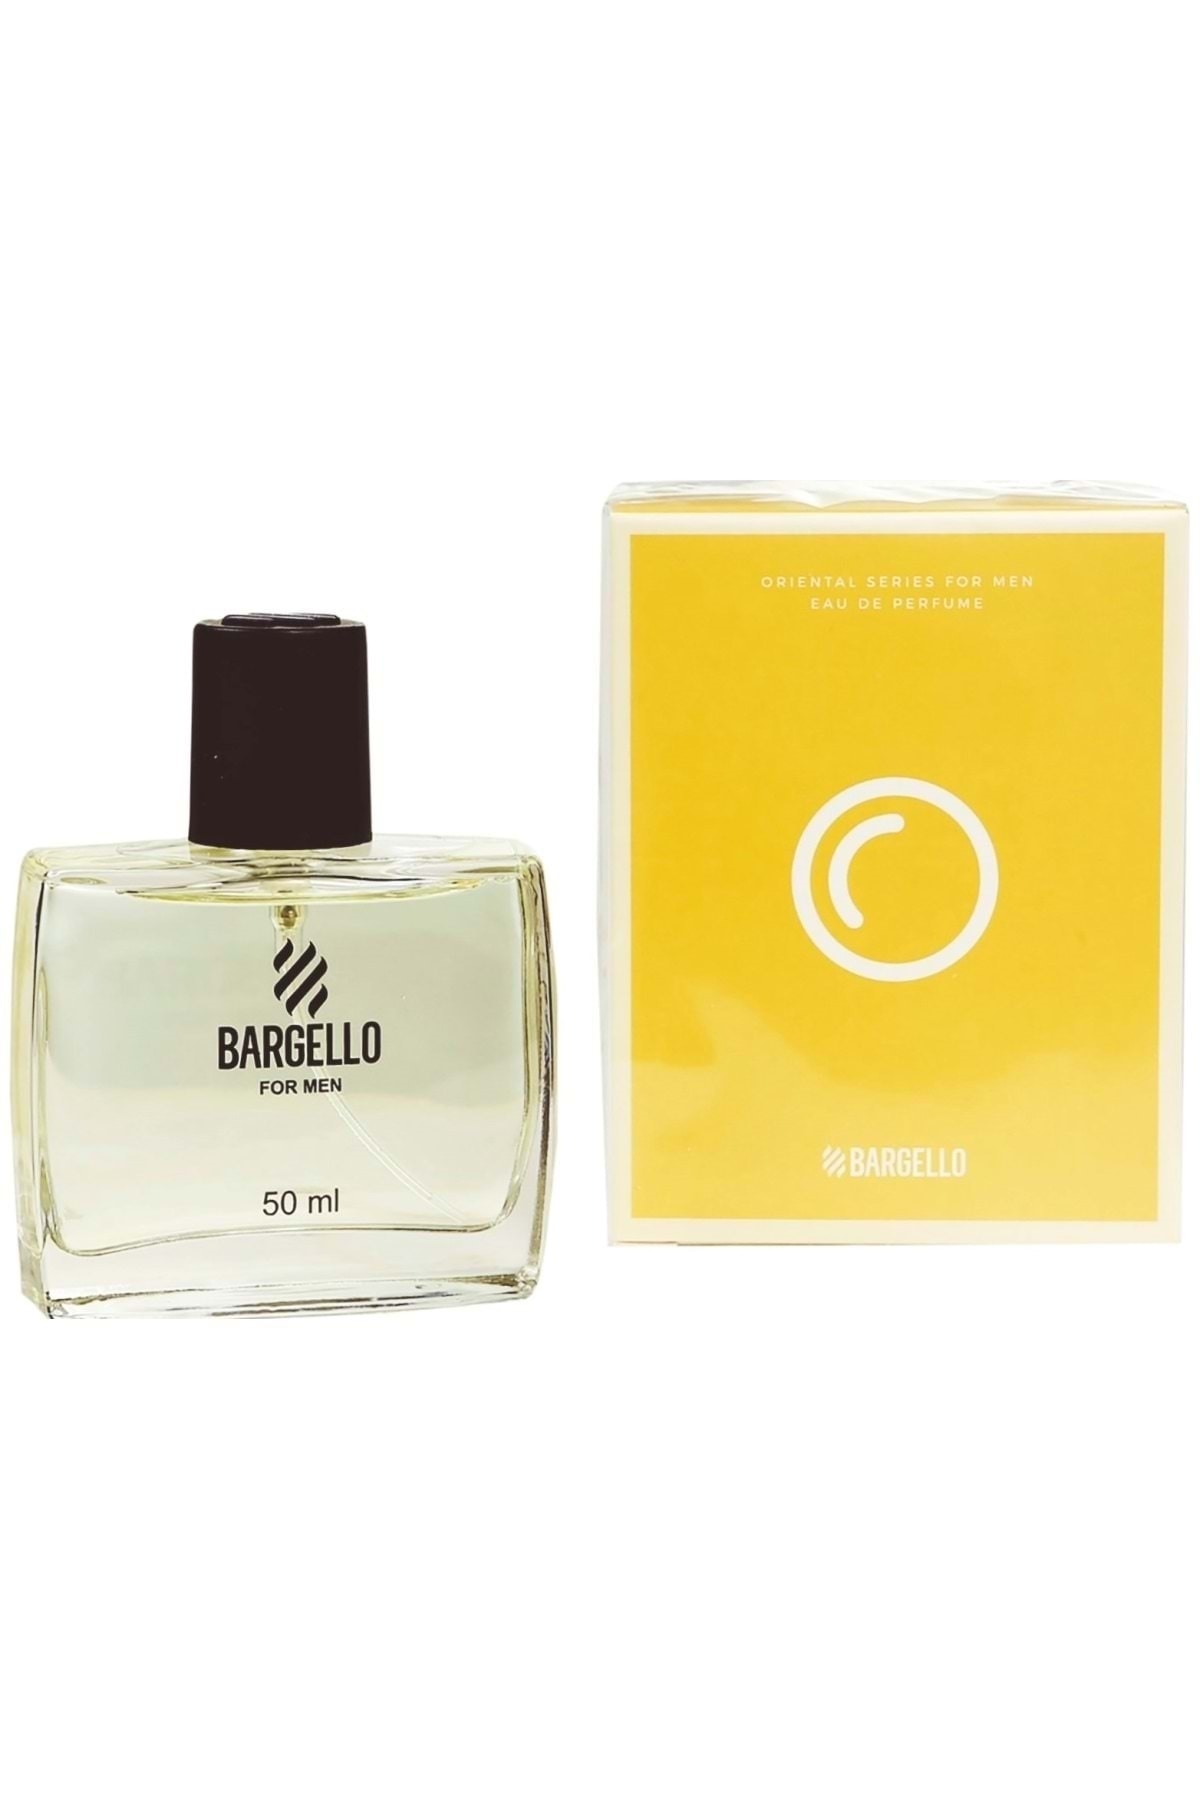 Bargello Oriental Erkek Parfüm 50 ml Edp 734